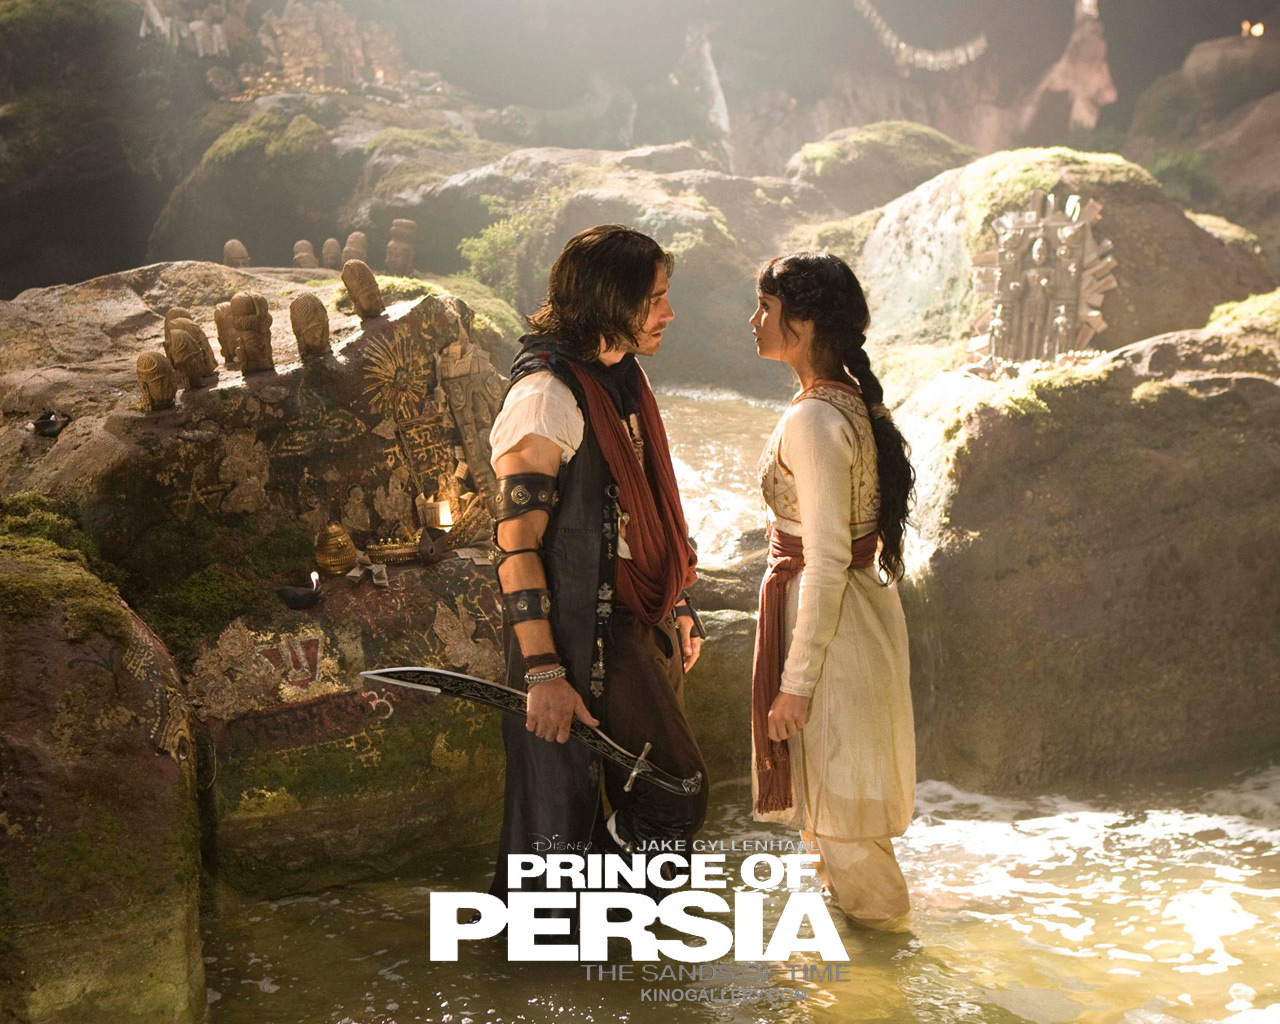 Prince of Persia: The Sands of Time (película) Película